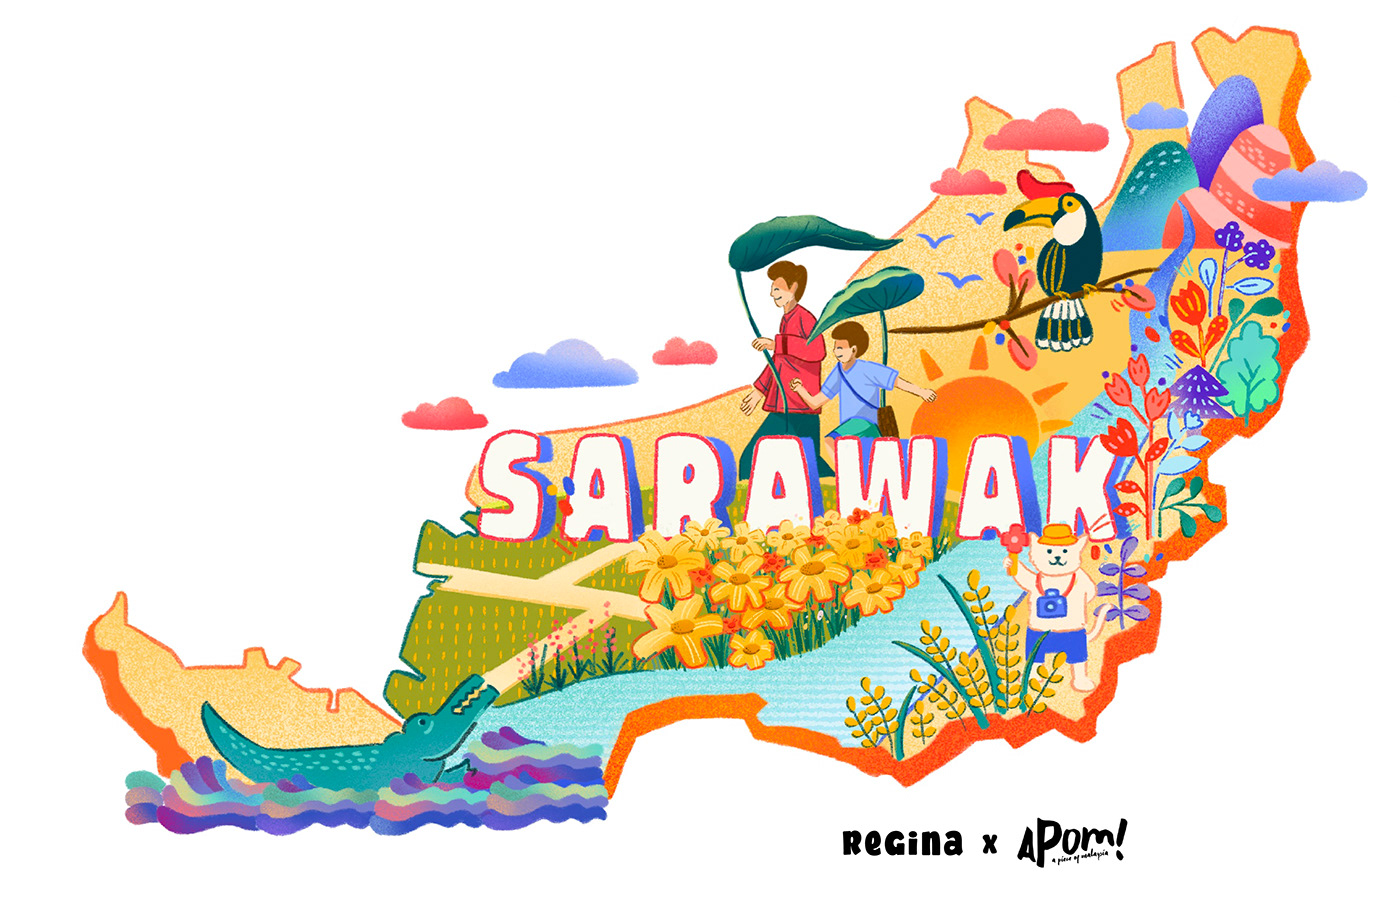 culture Digital Art  ILLUSTRATION  malaysia nft sarawak Stamp Design artwork Collaboration